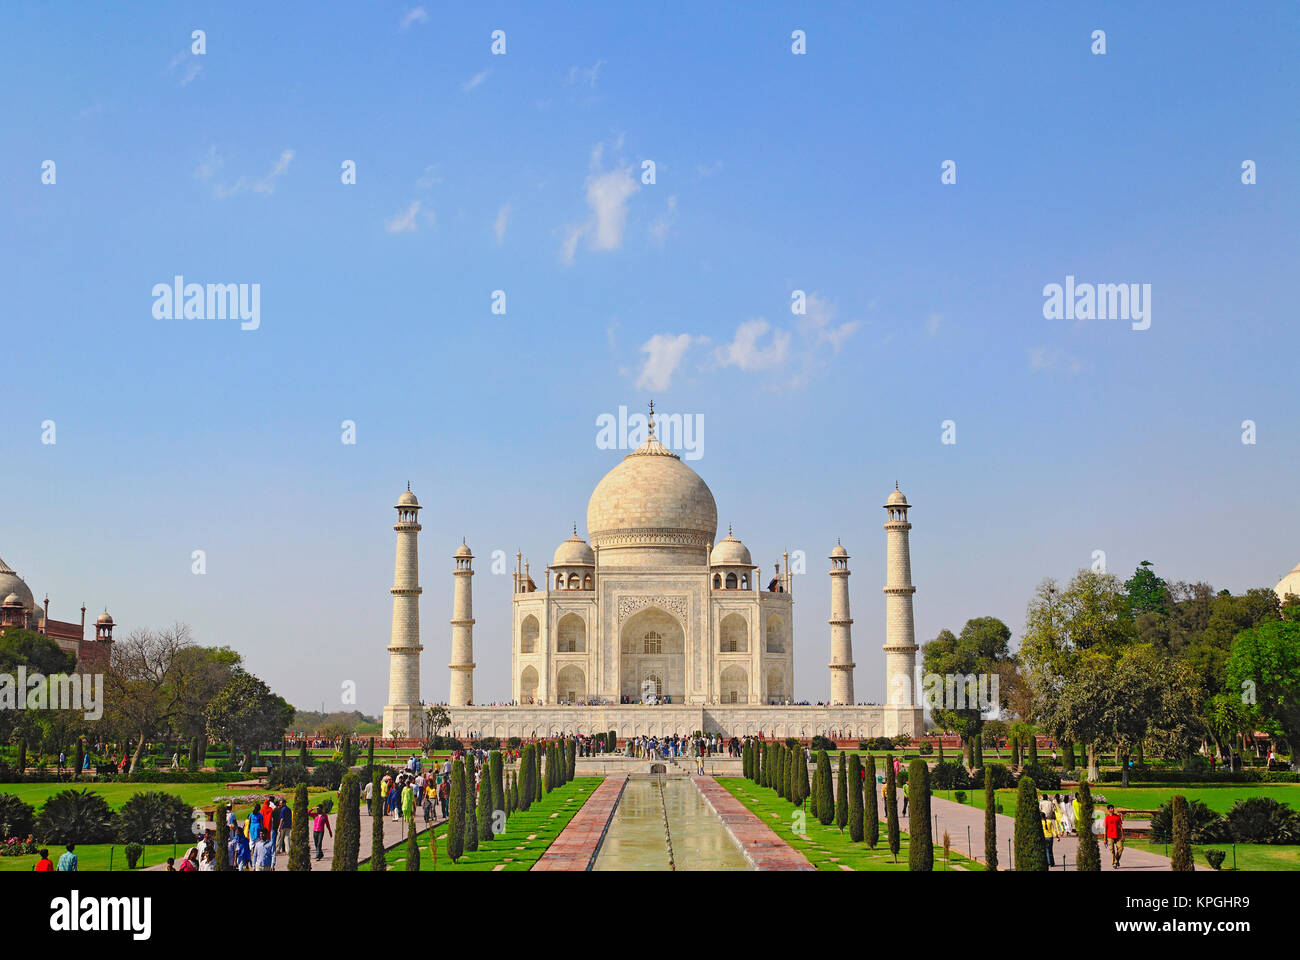 Taj Mahal, a mausoleum located in Agra, India, built by Mughal Emperor Shah Jahan in memory of his favorite wife, Mumtaz Mahal. Stock Photo